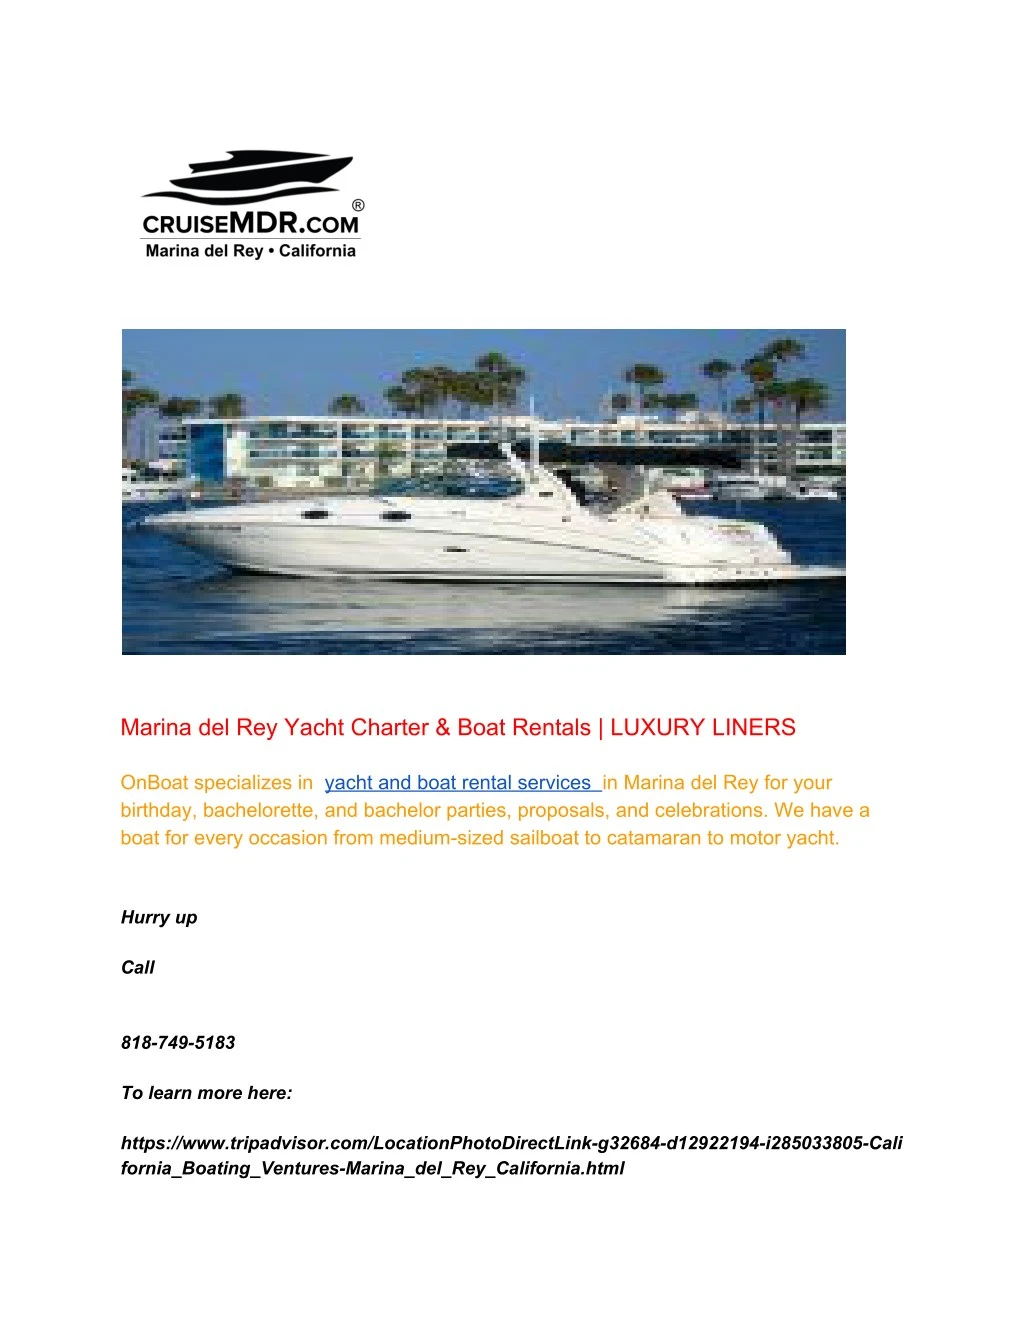 marina del rey yacht charter boat rentals luxury